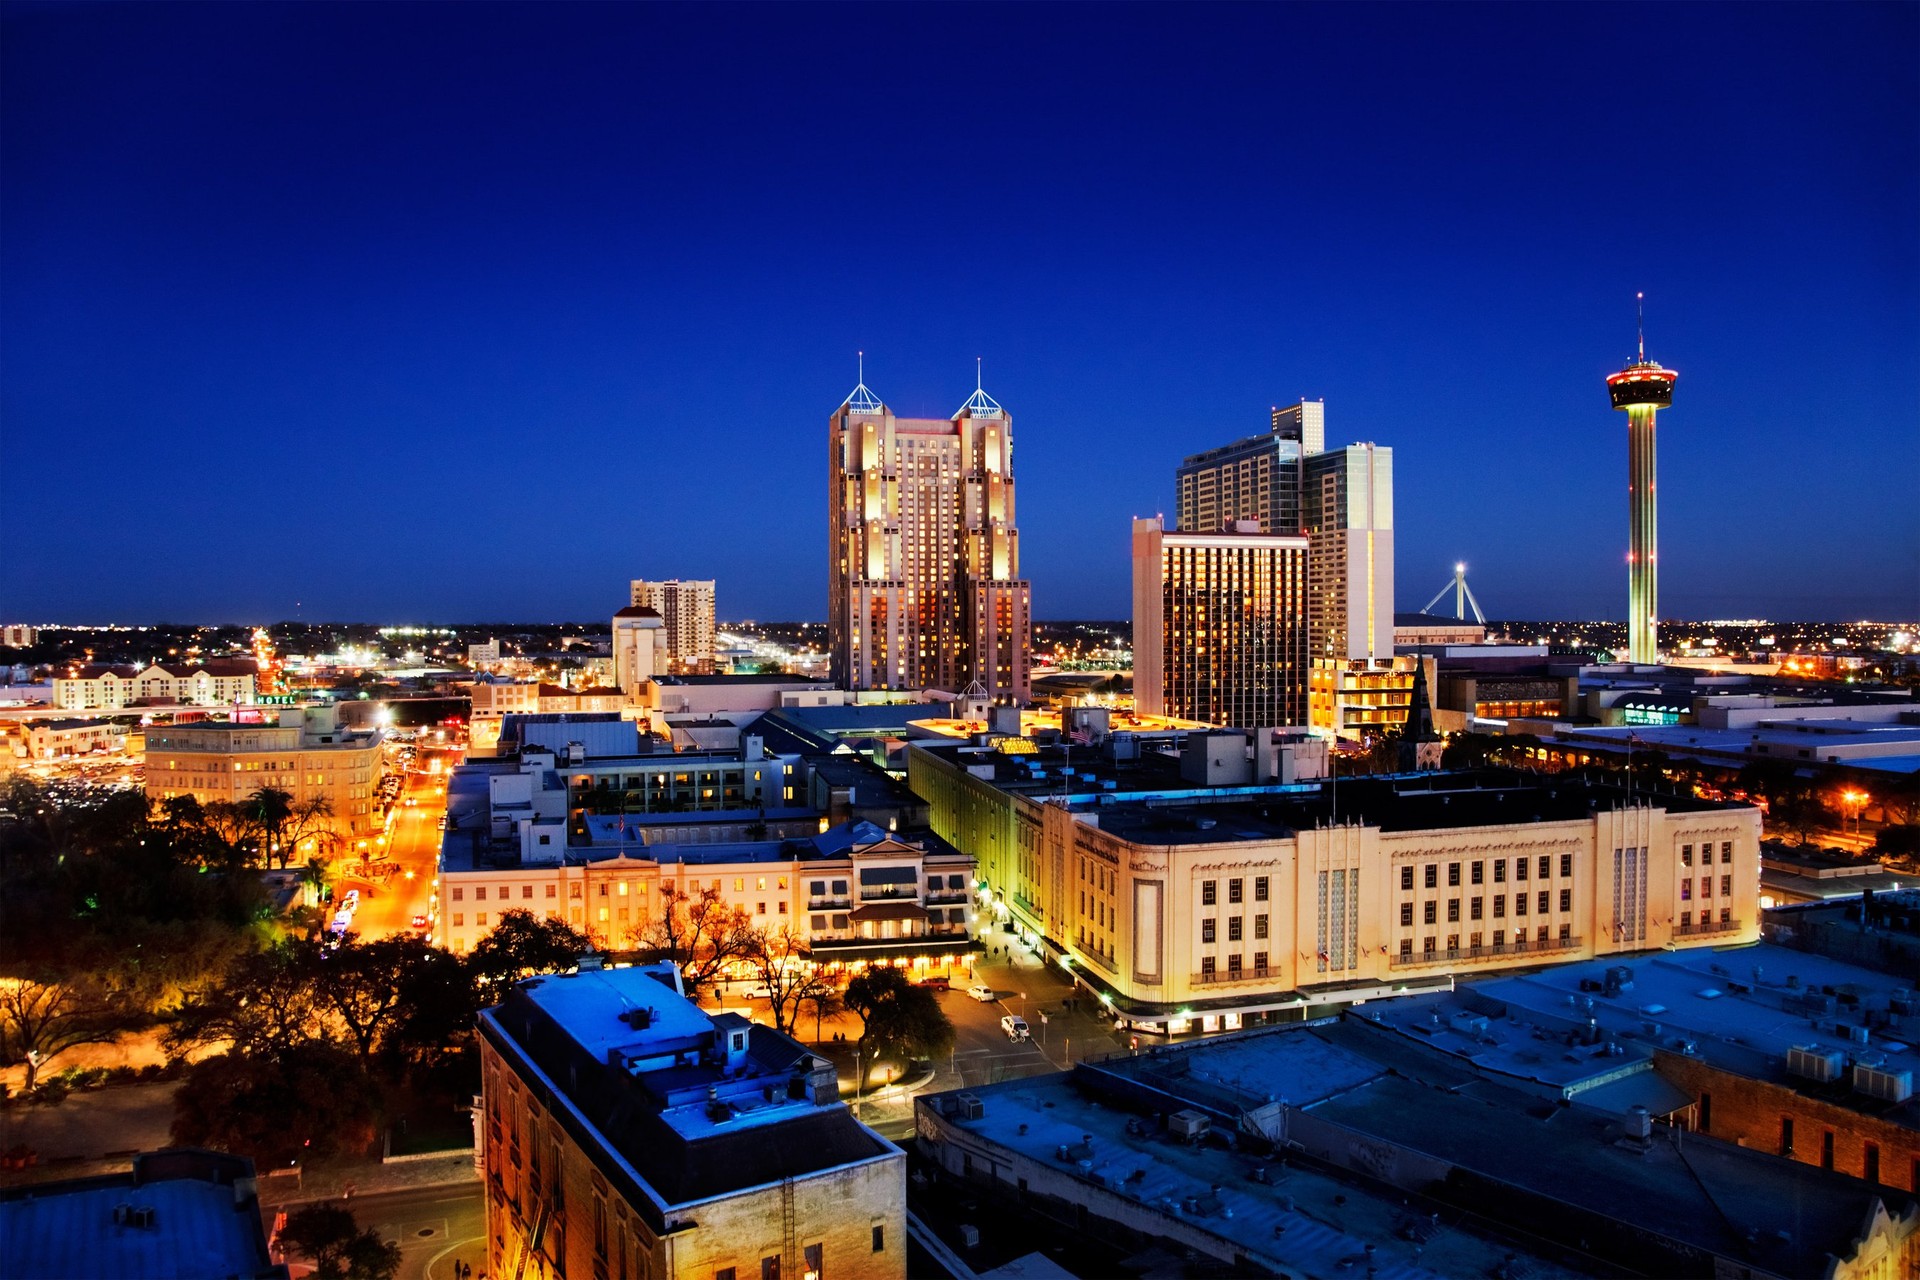 City view of downtown San Antonio